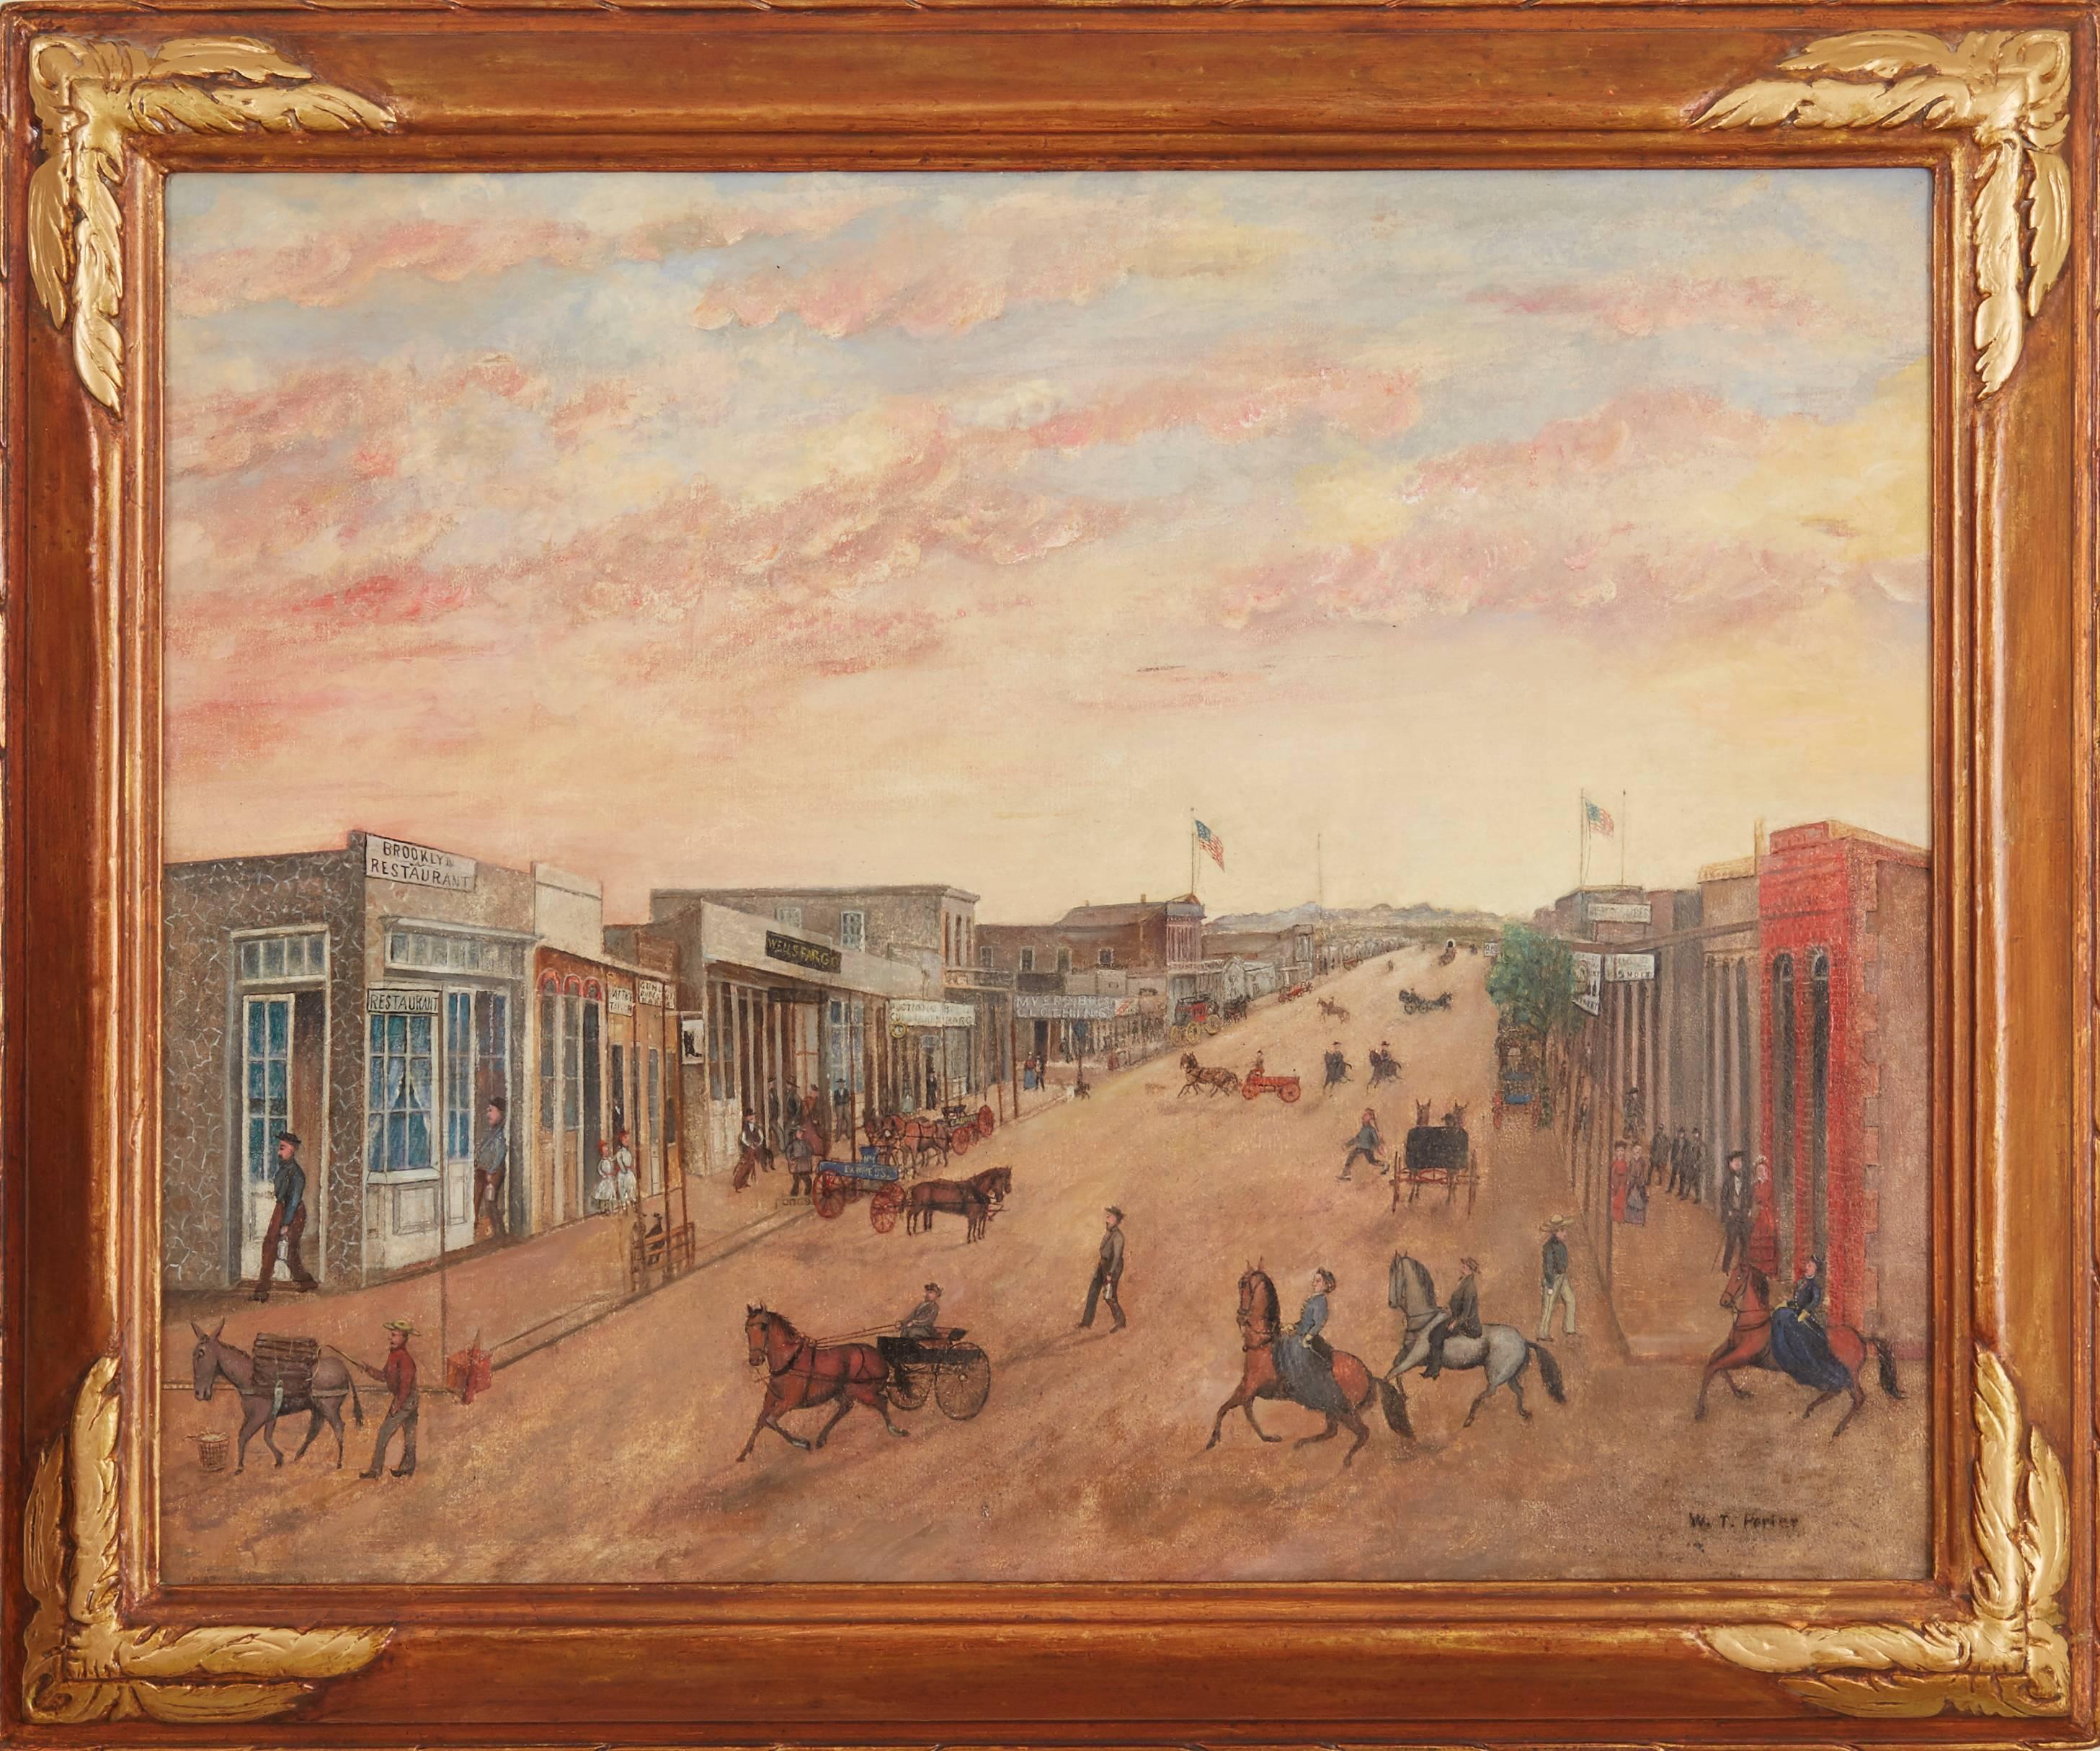 William Turner Porter Landscape Painting - Tombstone, Arizonza Territory